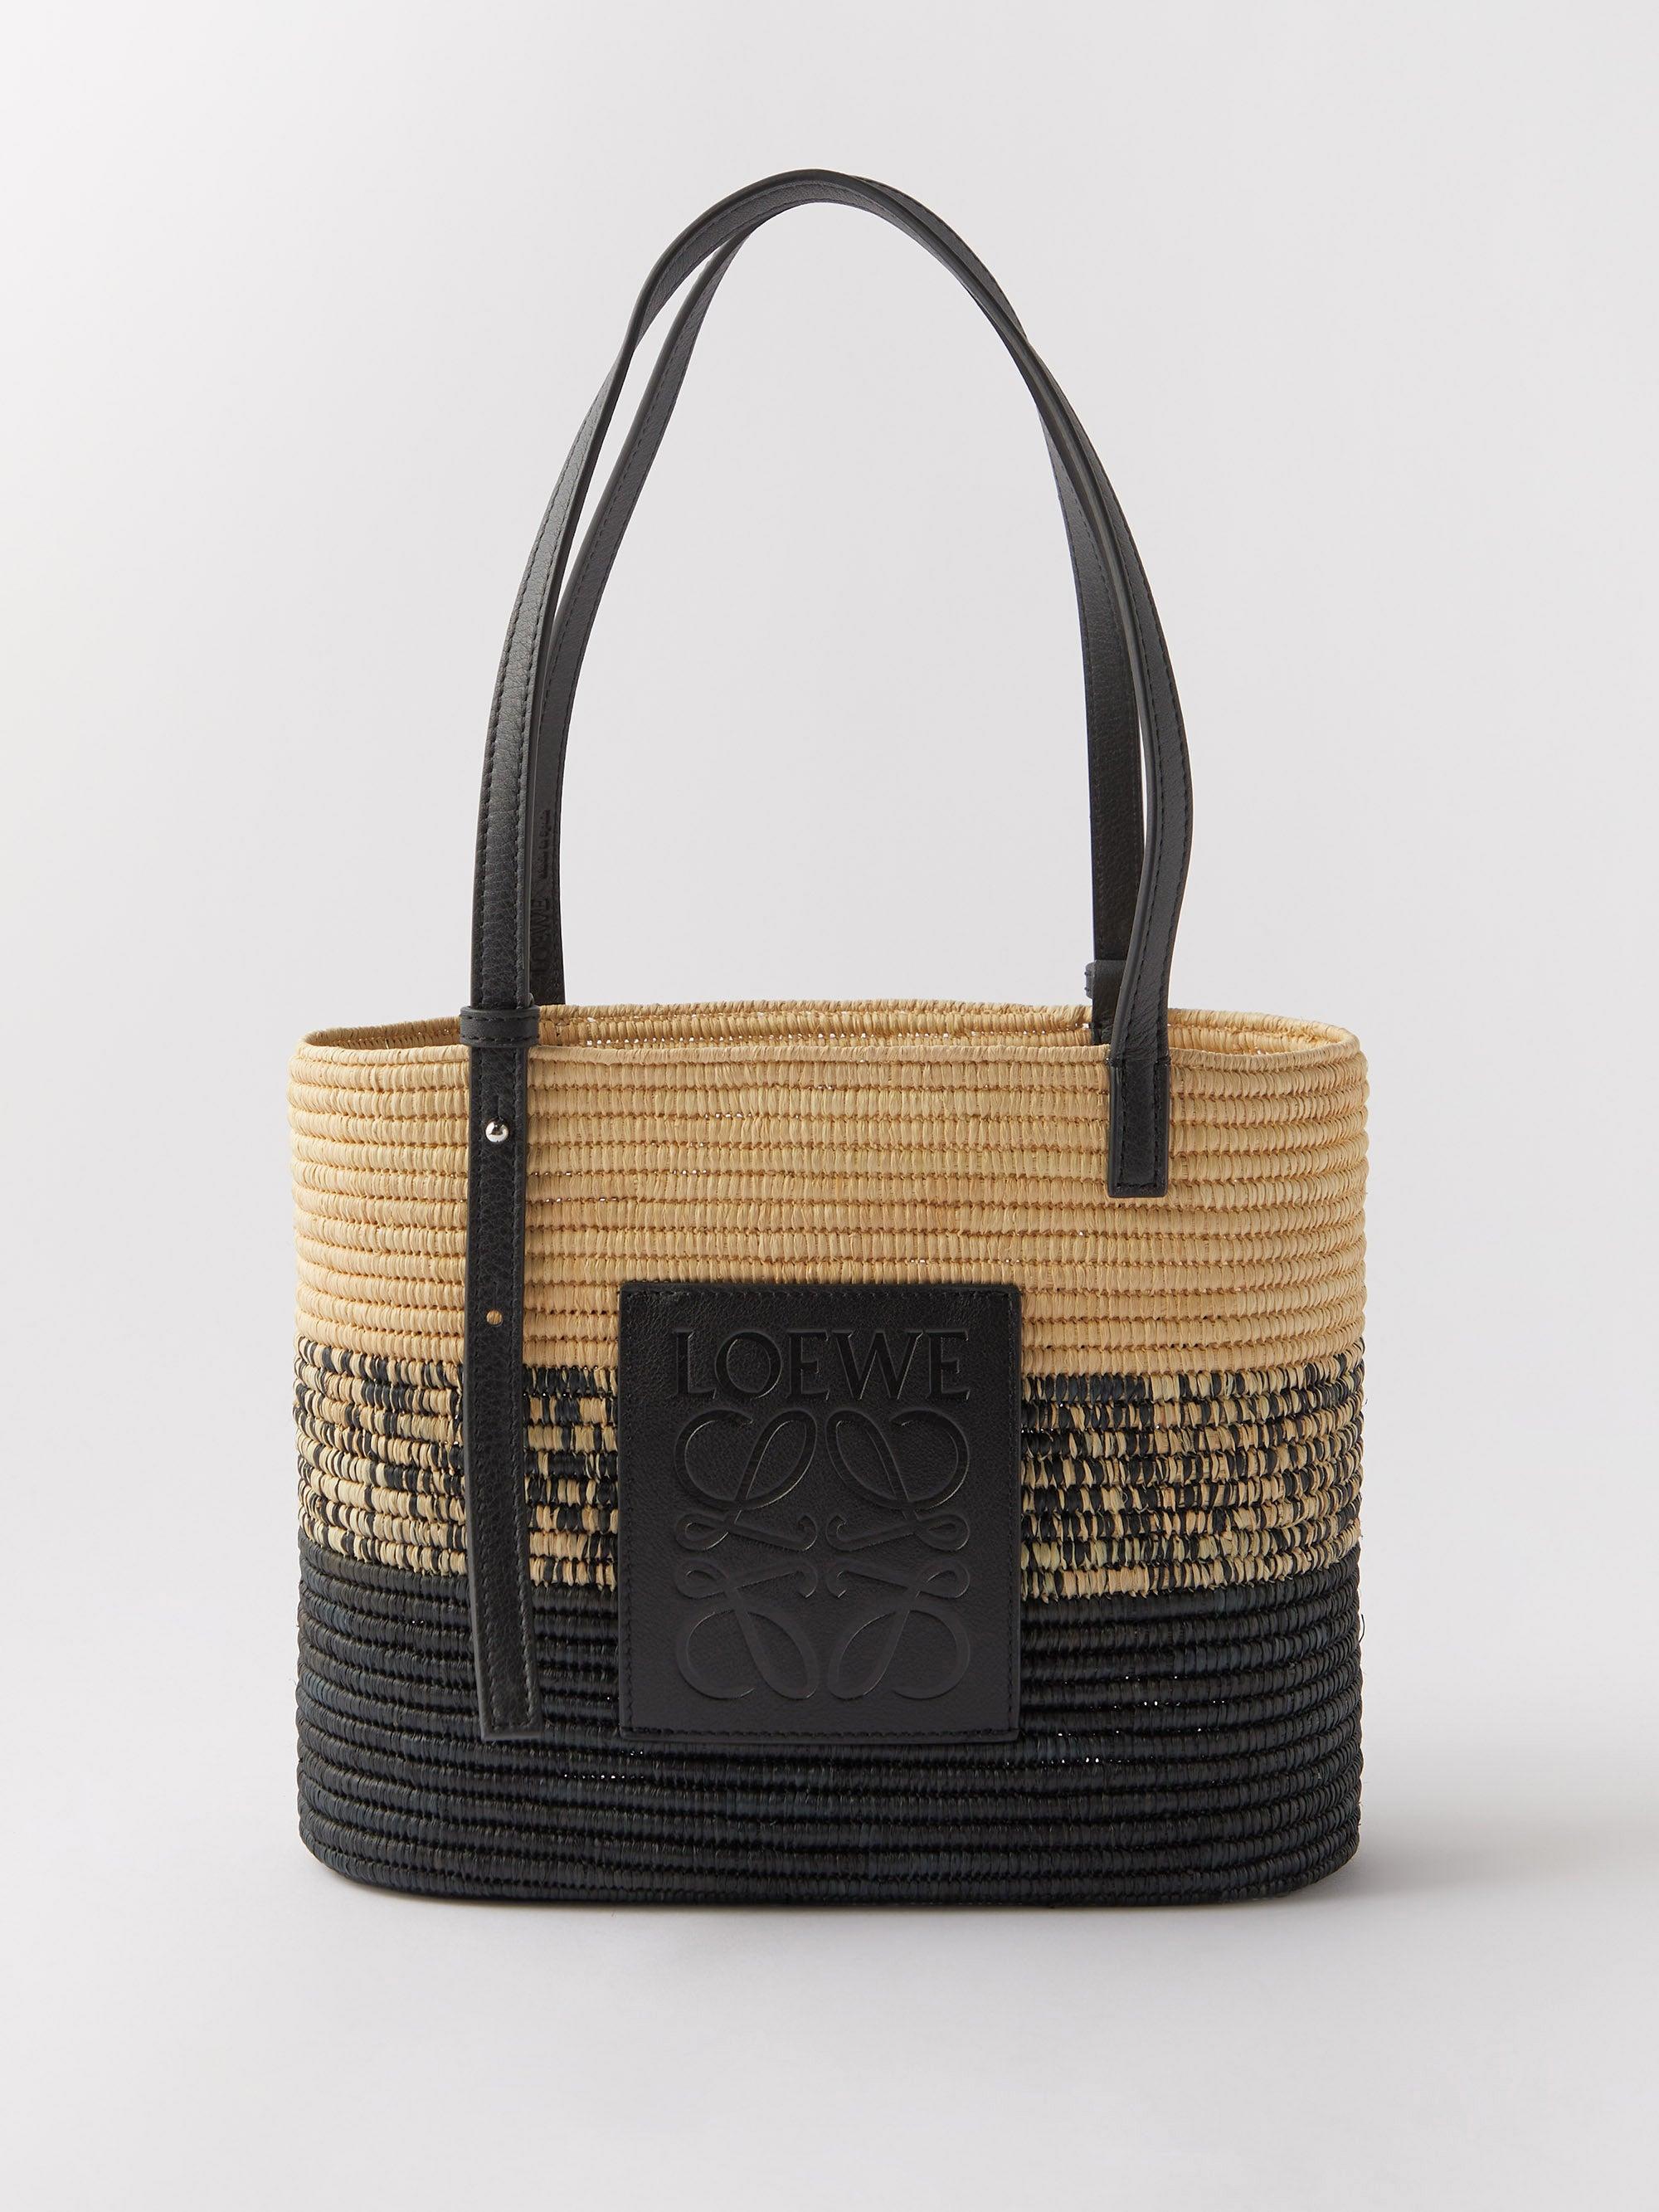 LOEWE Raffia Square Small Basket Tote Bag Ombre Black | FASHIONPHILE